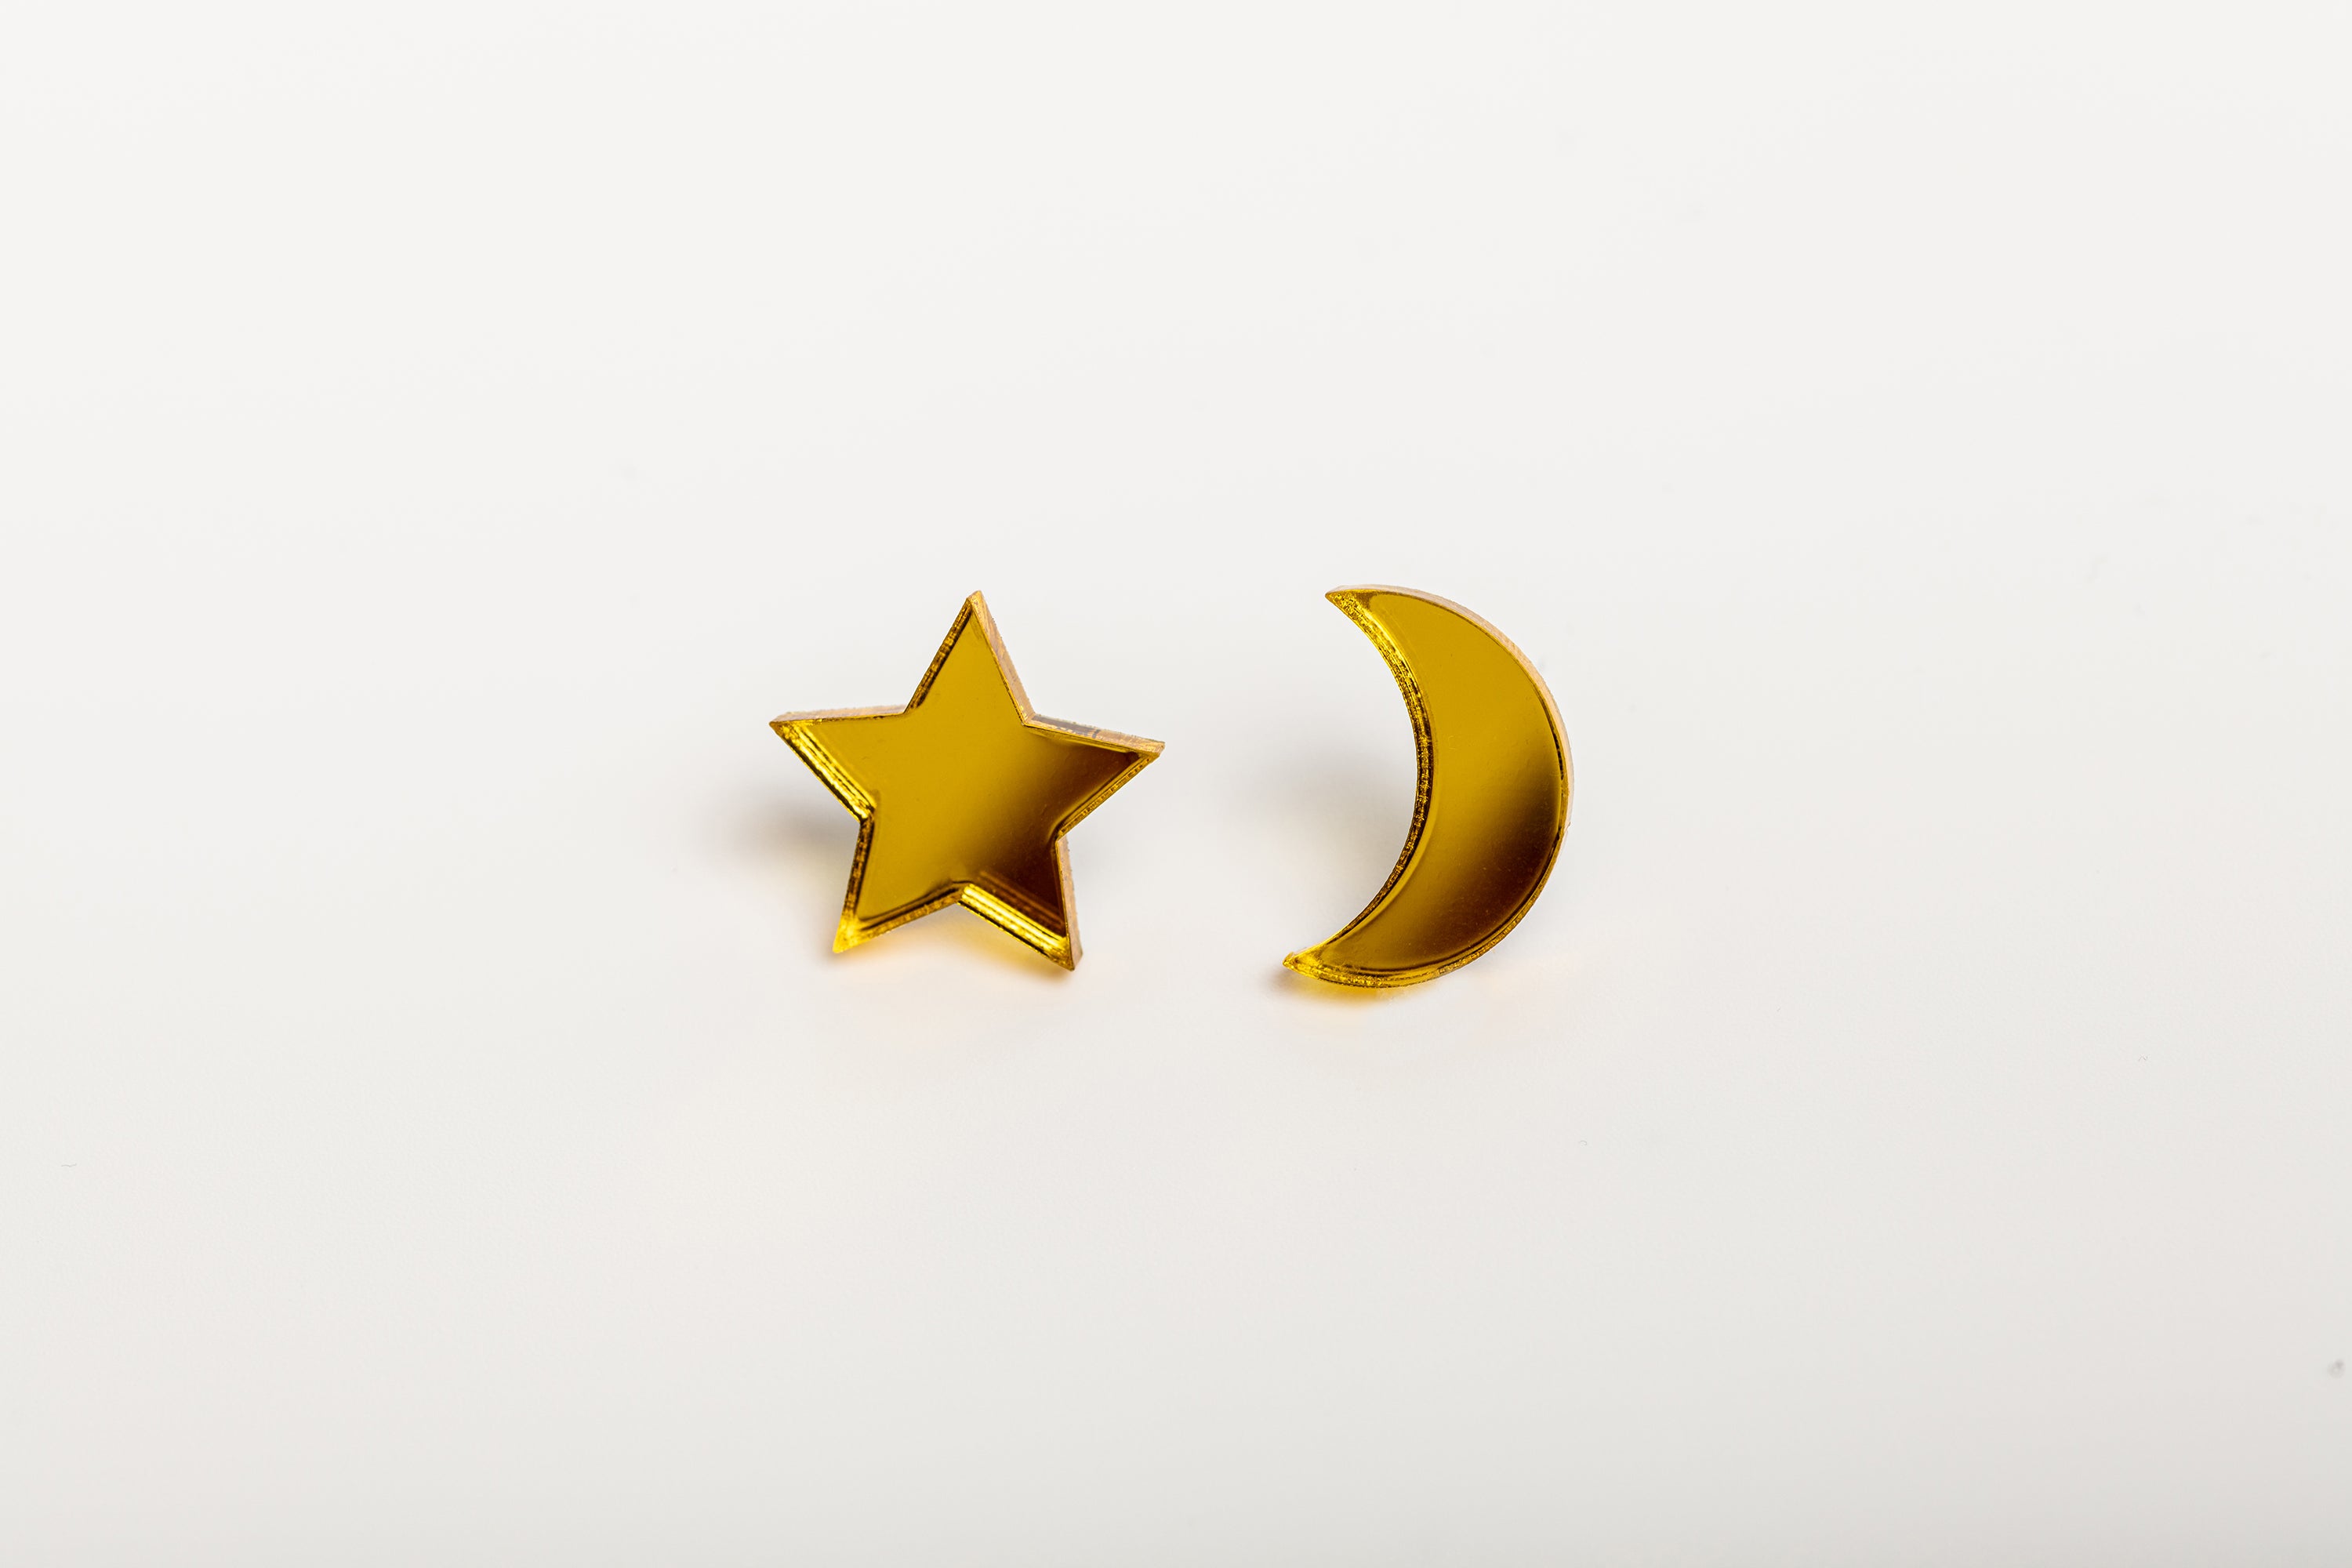 Mini Moon and Star stud earrings